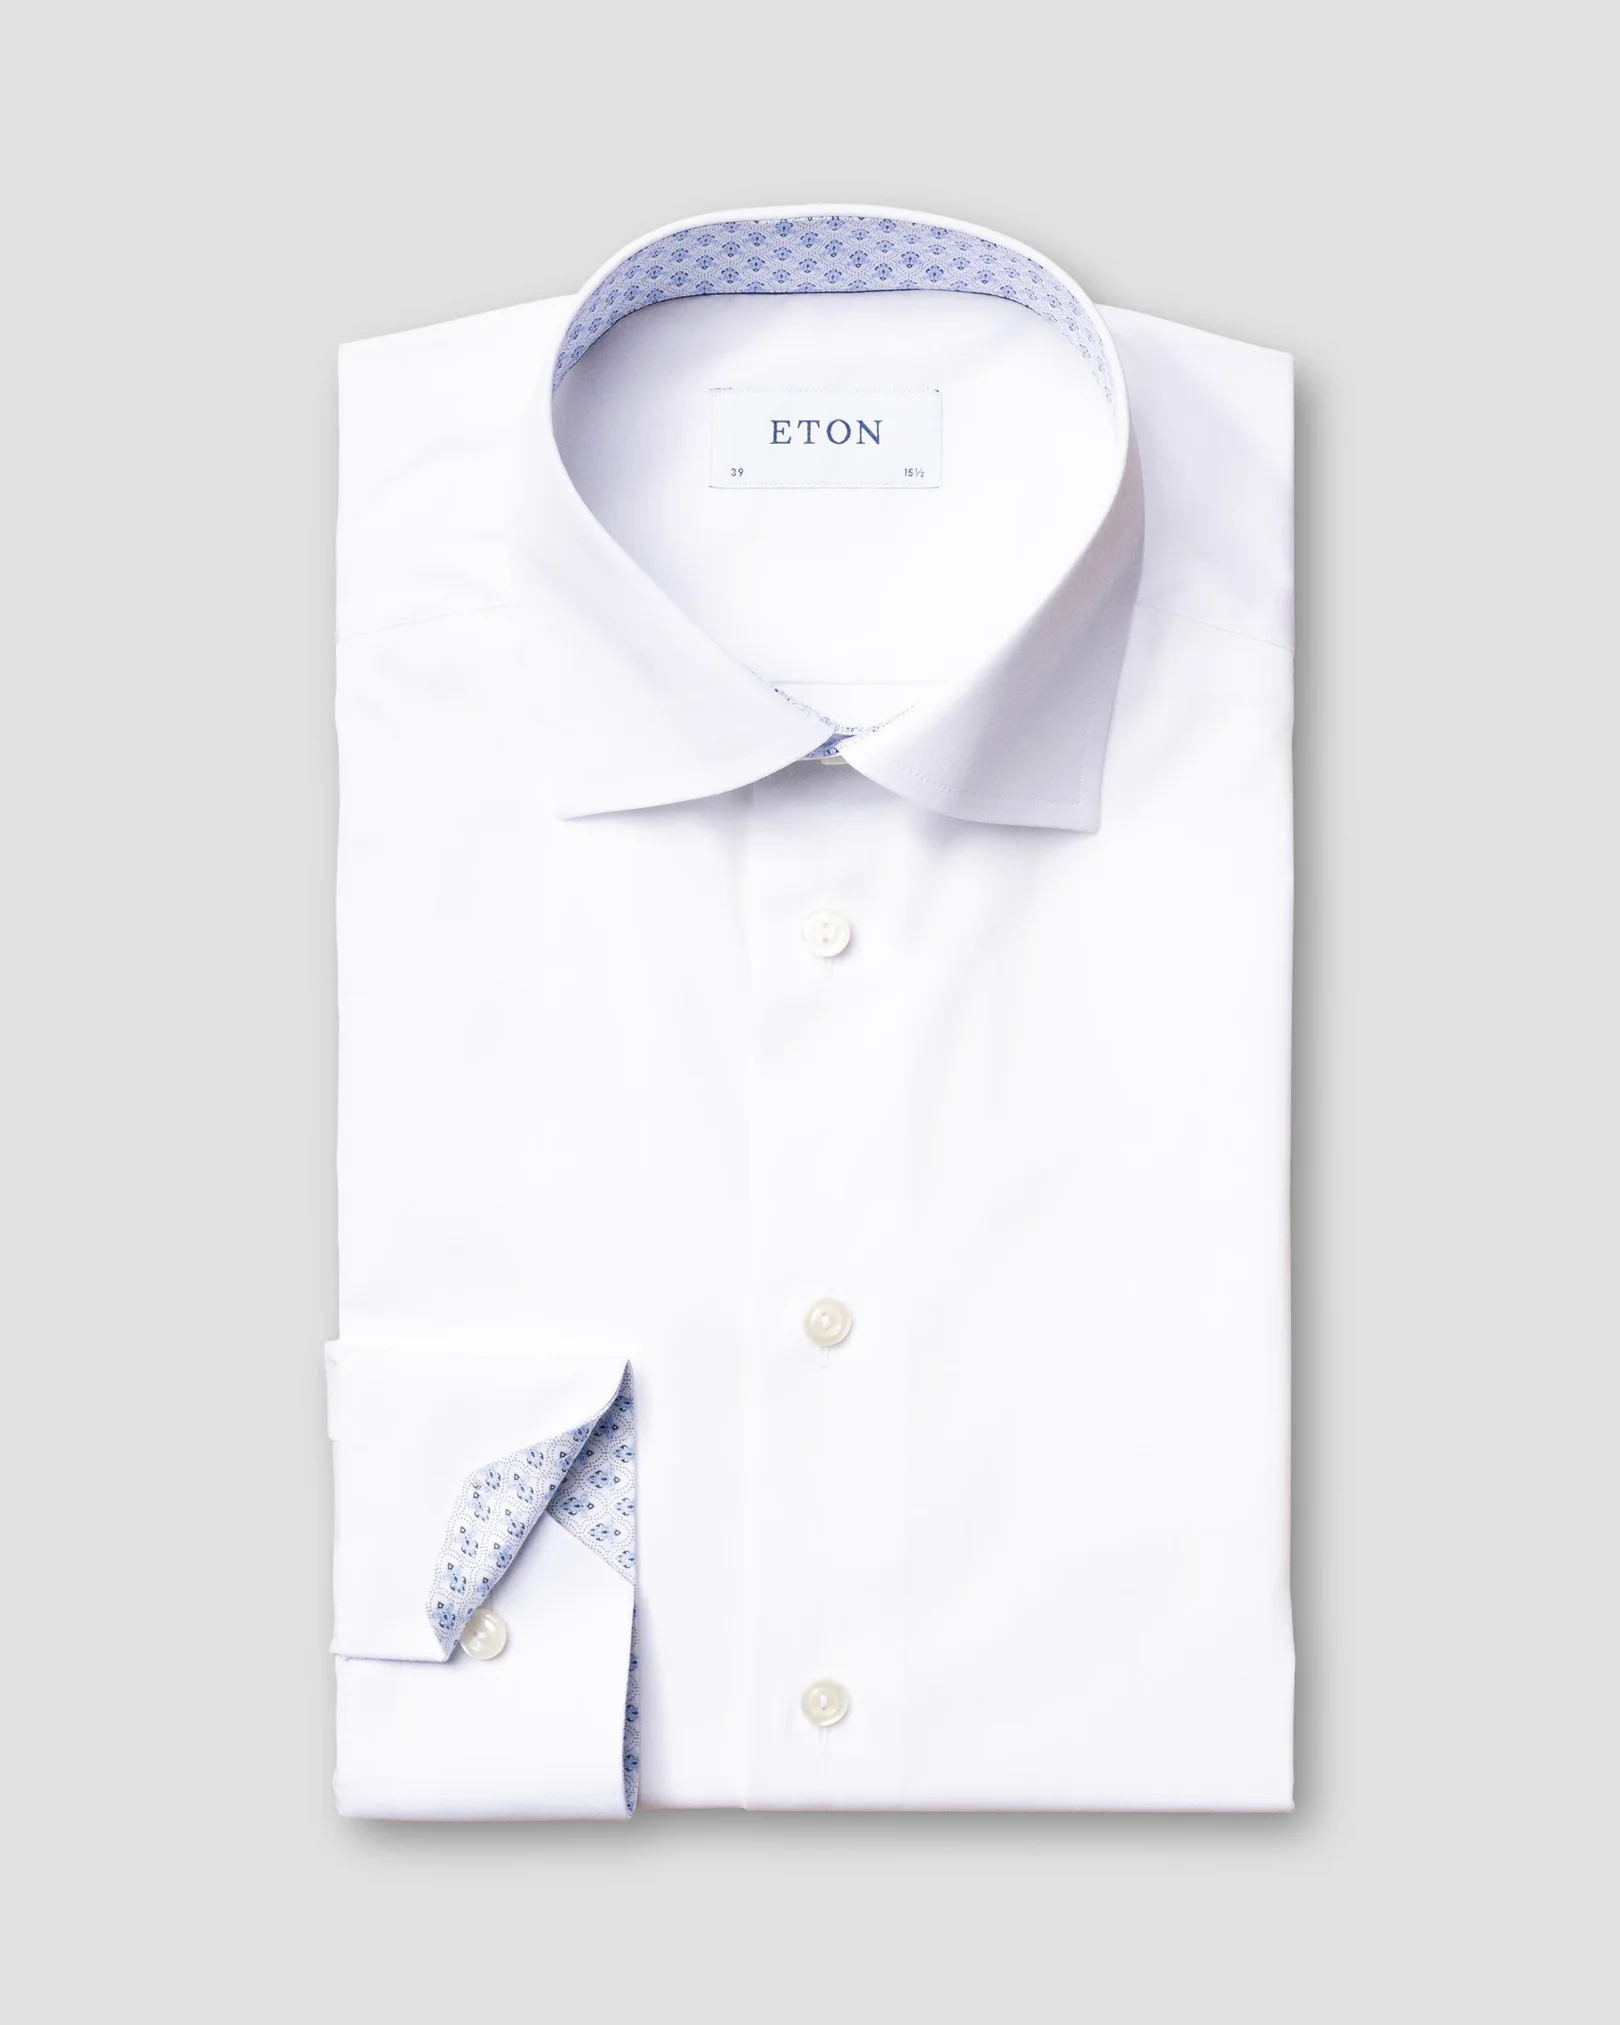 Eton - white poplin shirt micro print details